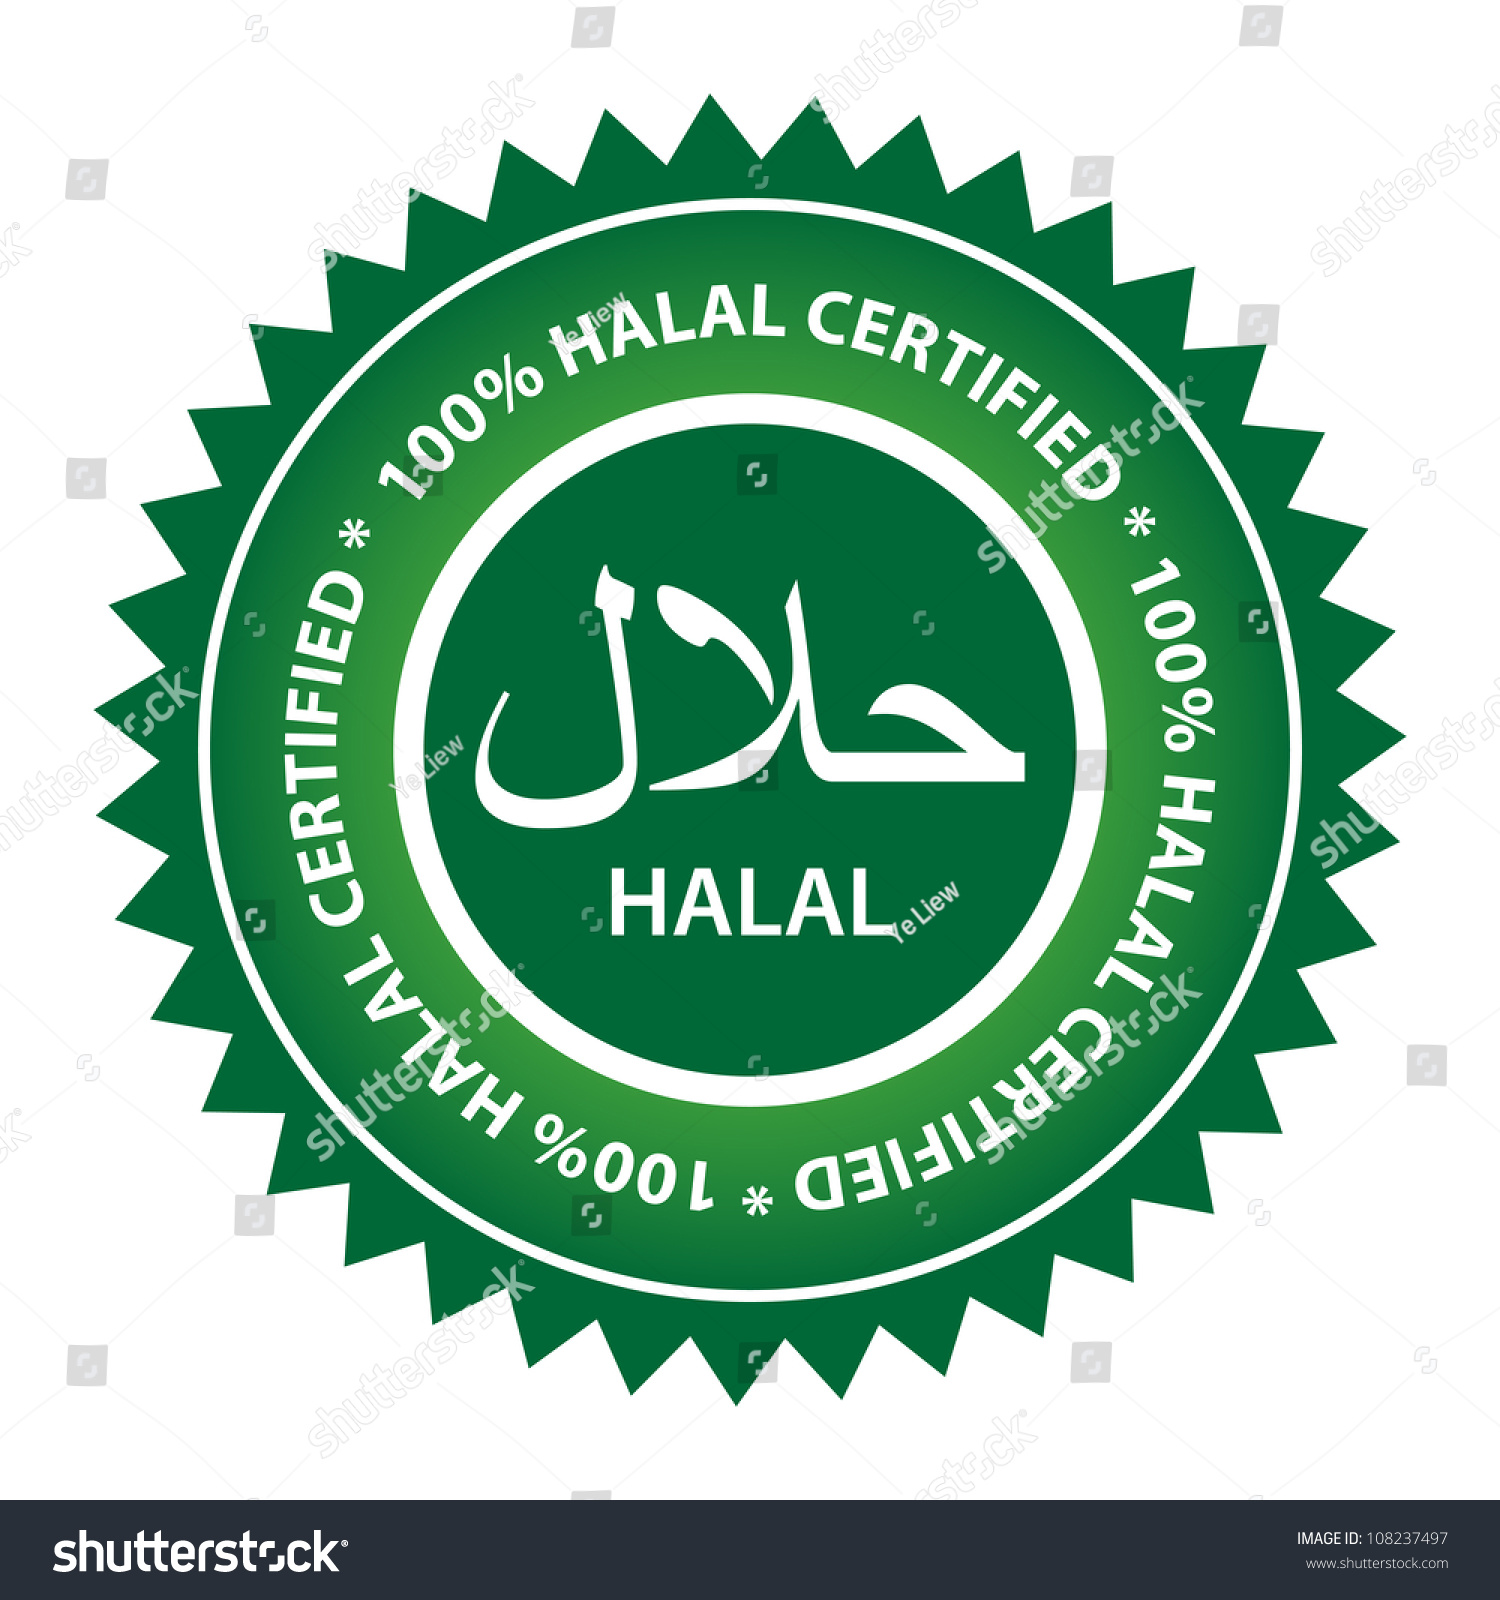 Binary options is haram or halal